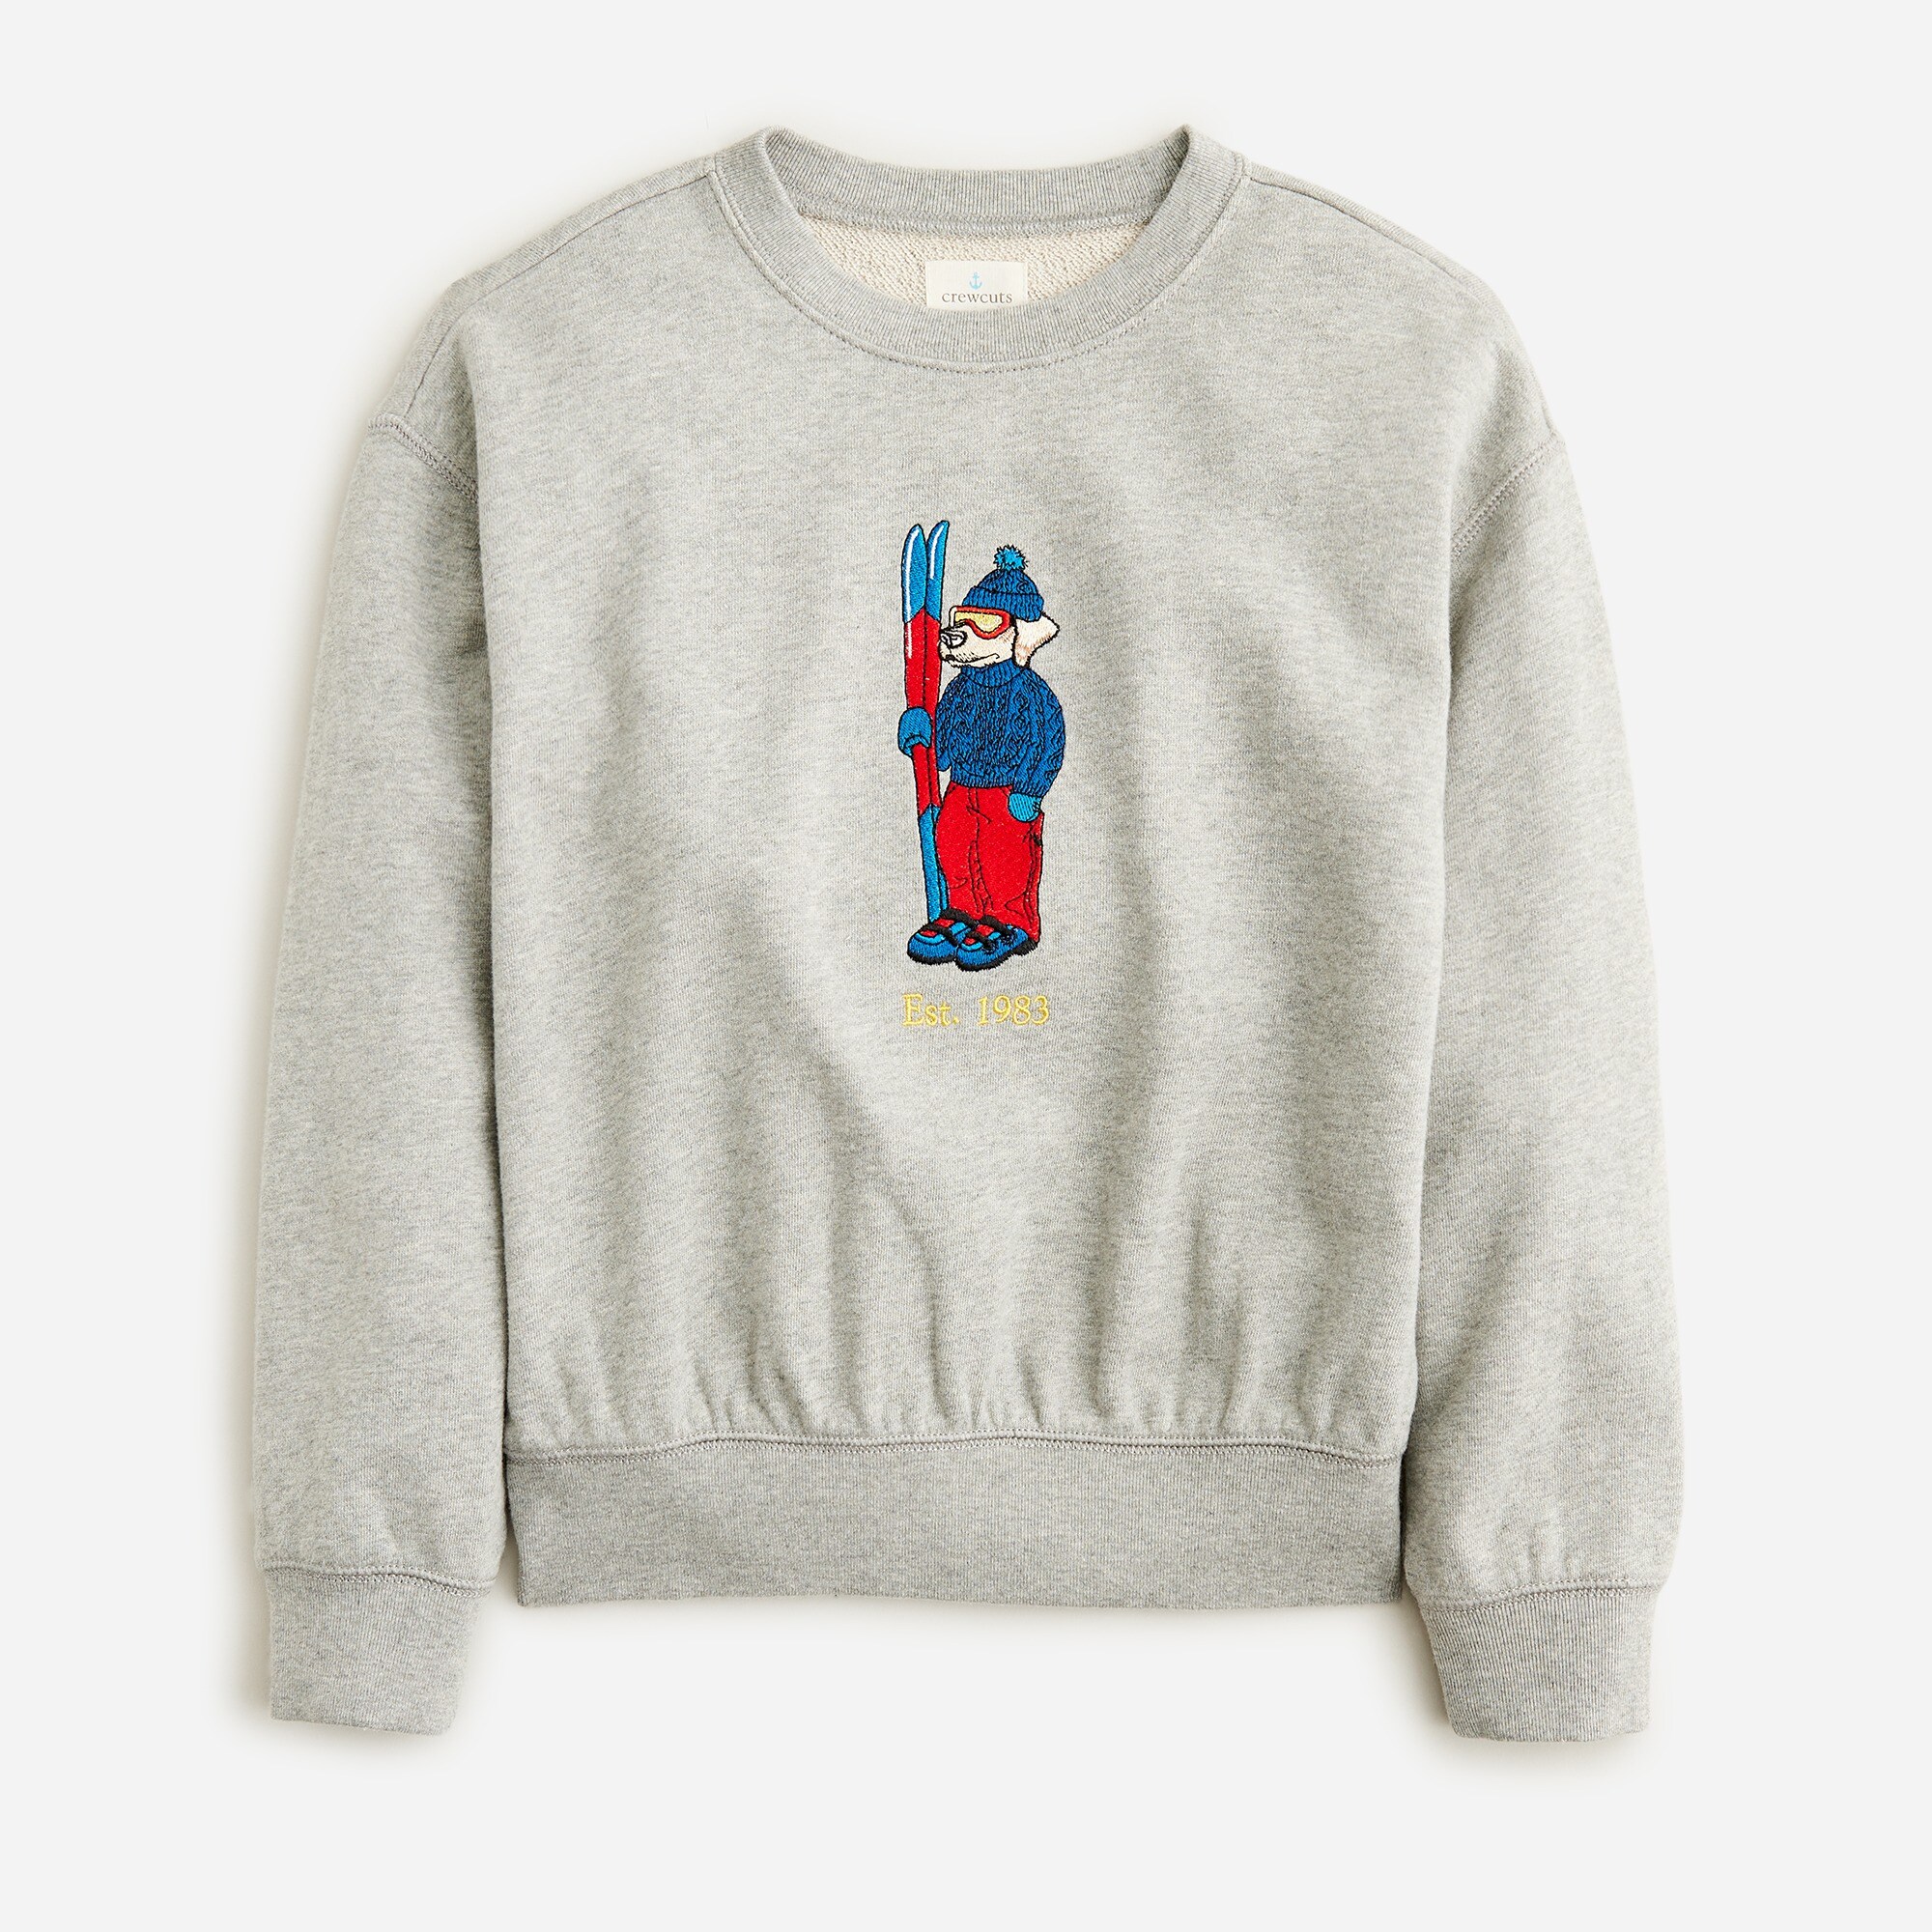  Kids' embroidered &quot;ski dog&quot; graphic crewneck sweatshirt